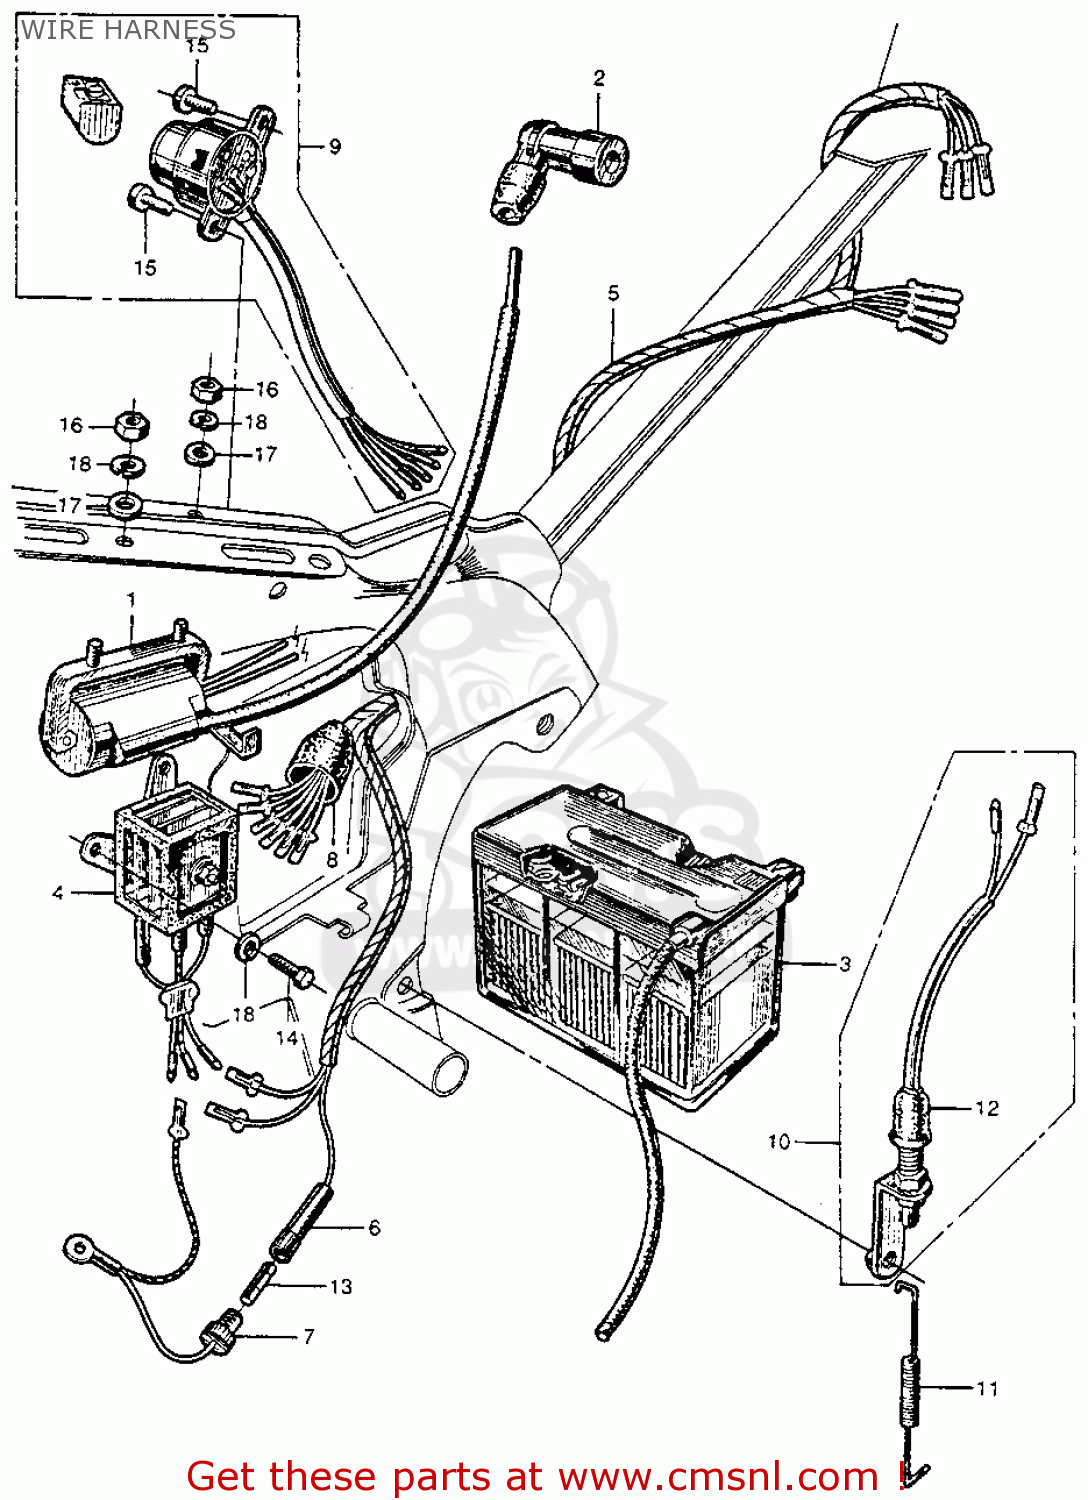 1964 honda ct200 trail90 wiring diagram